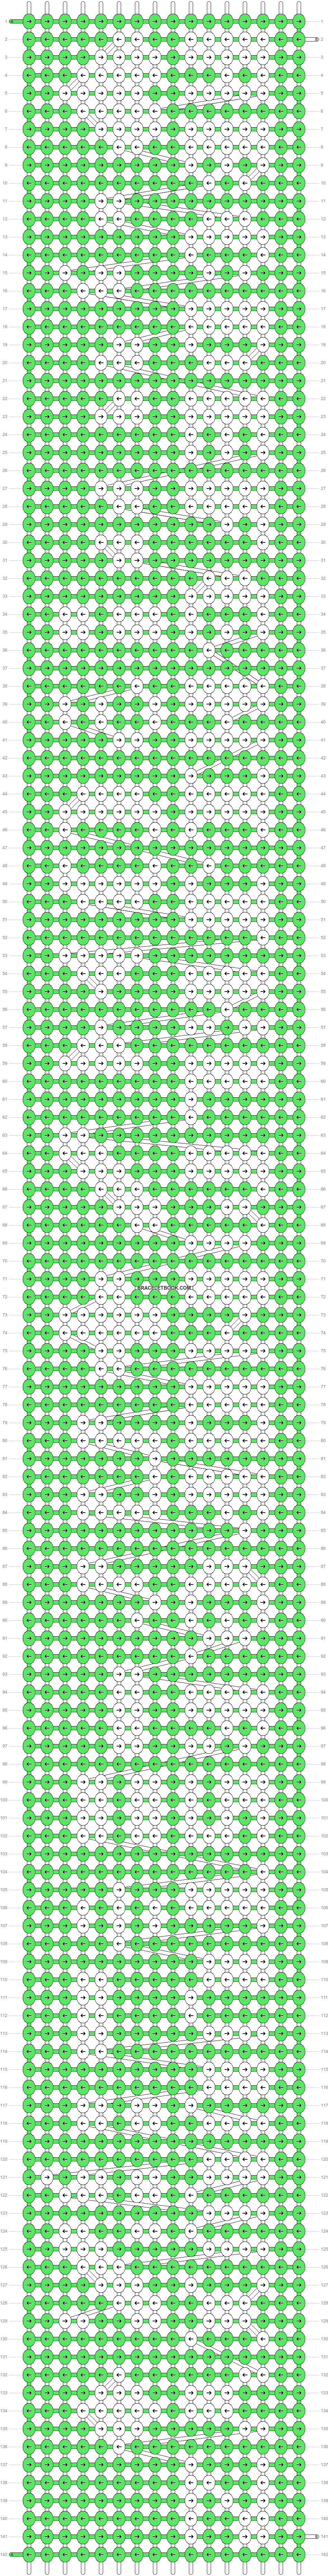 Alpha pattern #59423 variation #105321 pattern